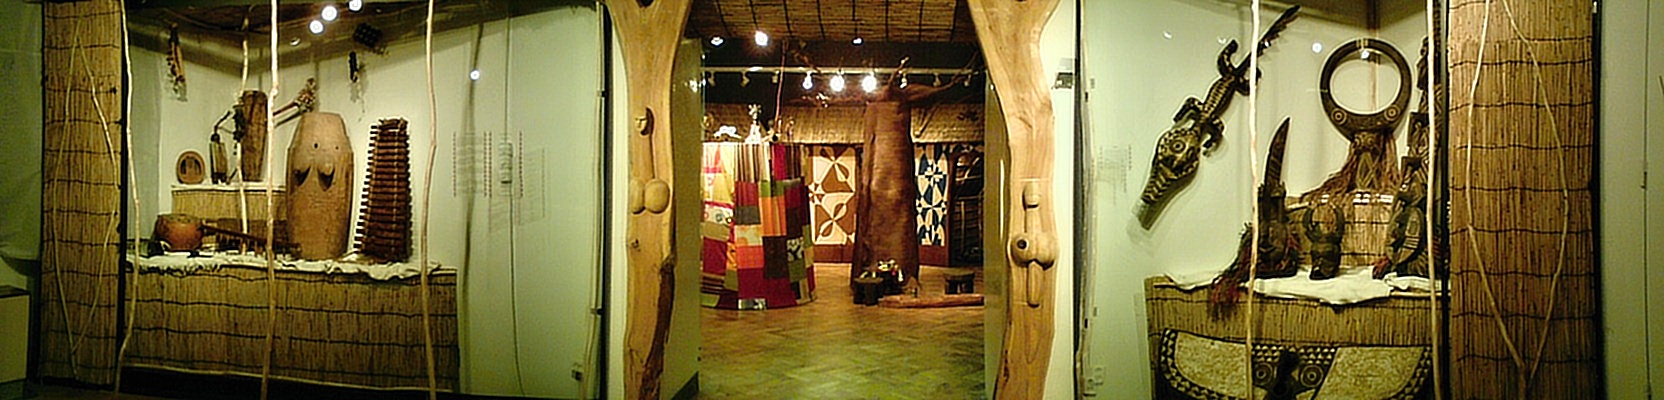 Poslové magie II., Náprstkovo muzeum